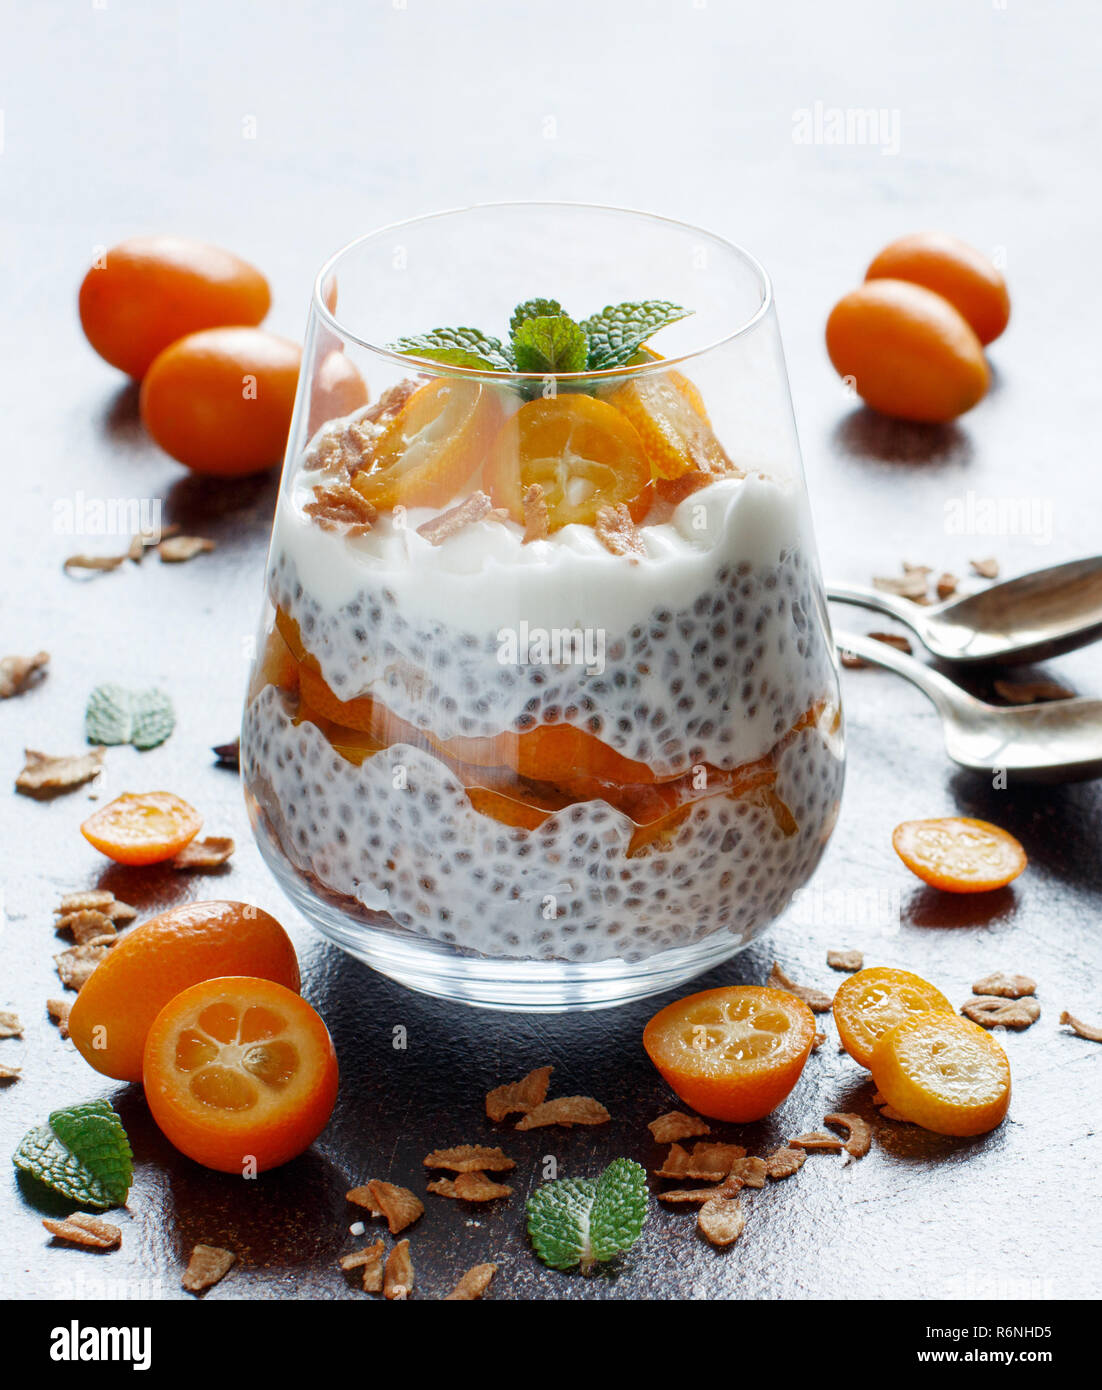 Chia pudding parfait with kumquat Stock Photo - Alamy